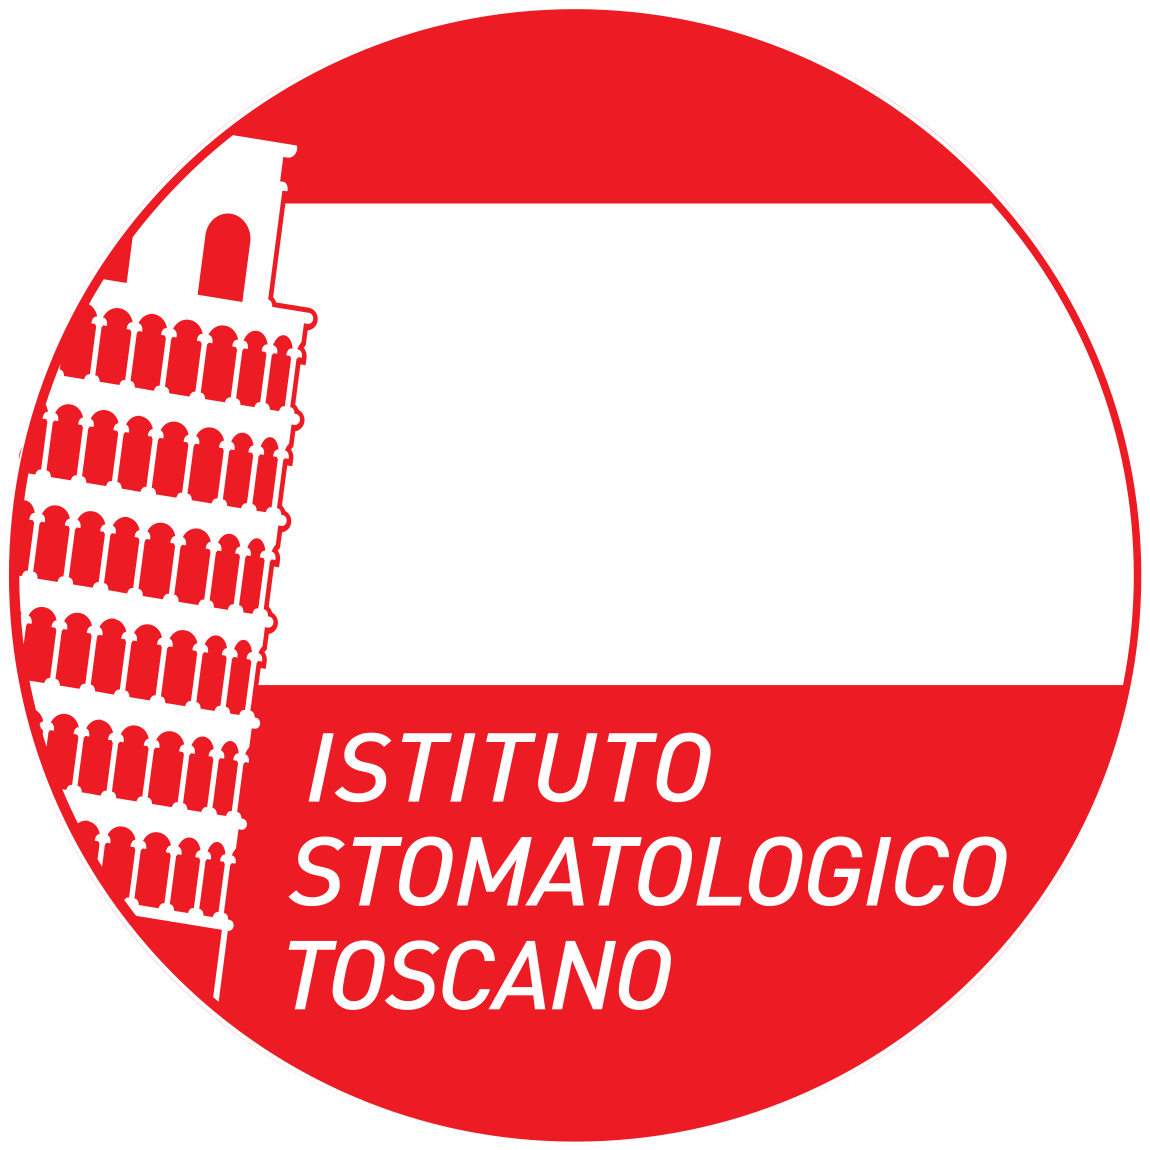 Istituto Stomatologico Toscano